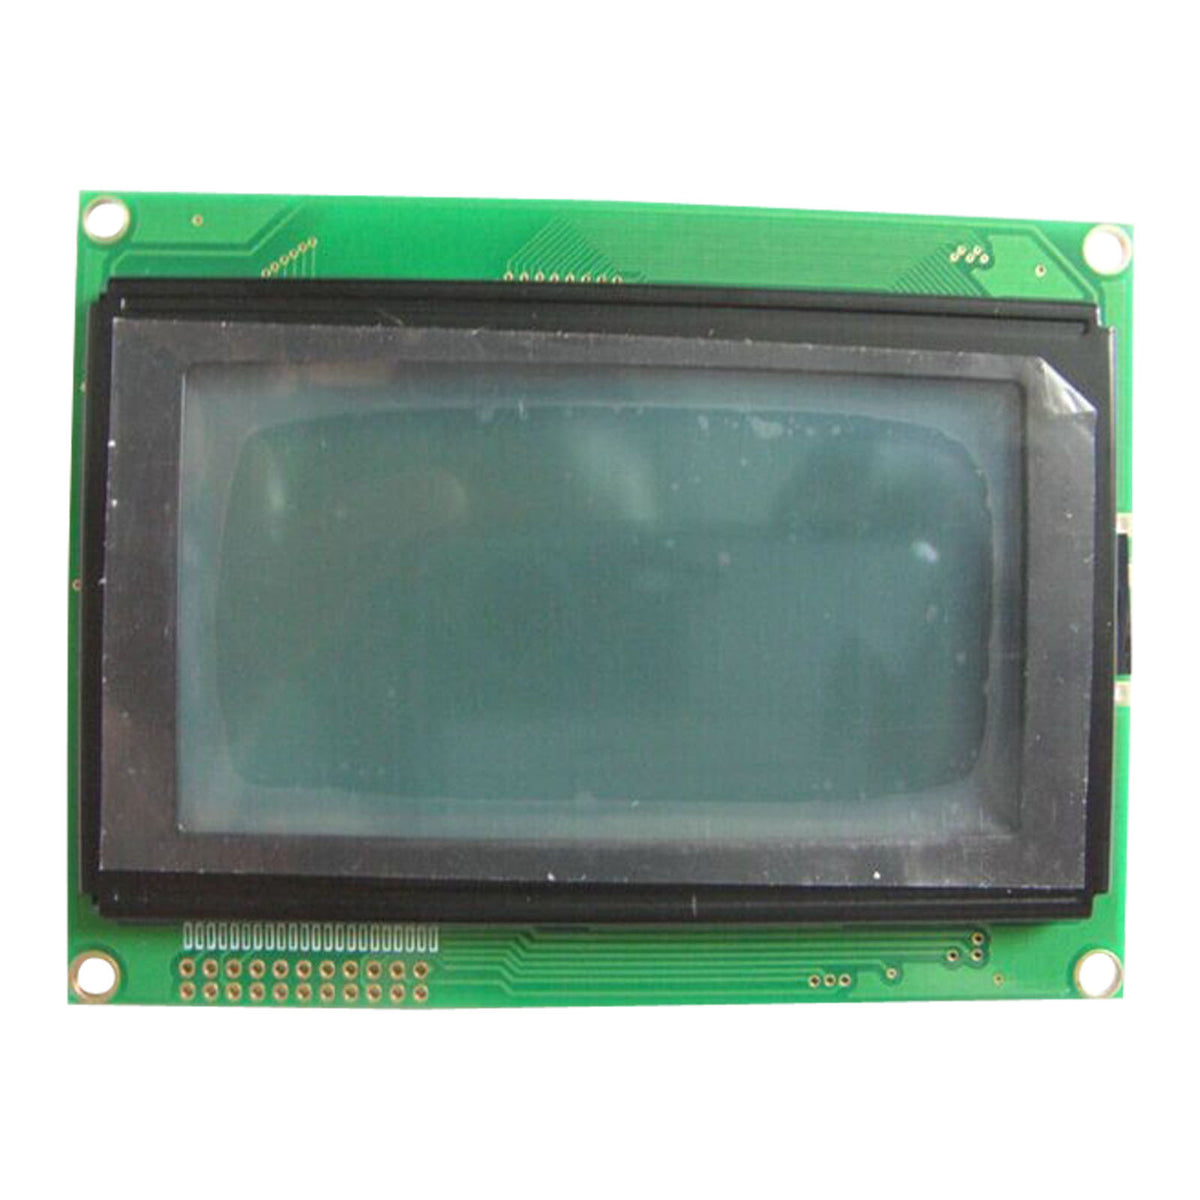 Monitor LCD Display for Daewoo Doosan Excavator DH225-7 - Sinocmp